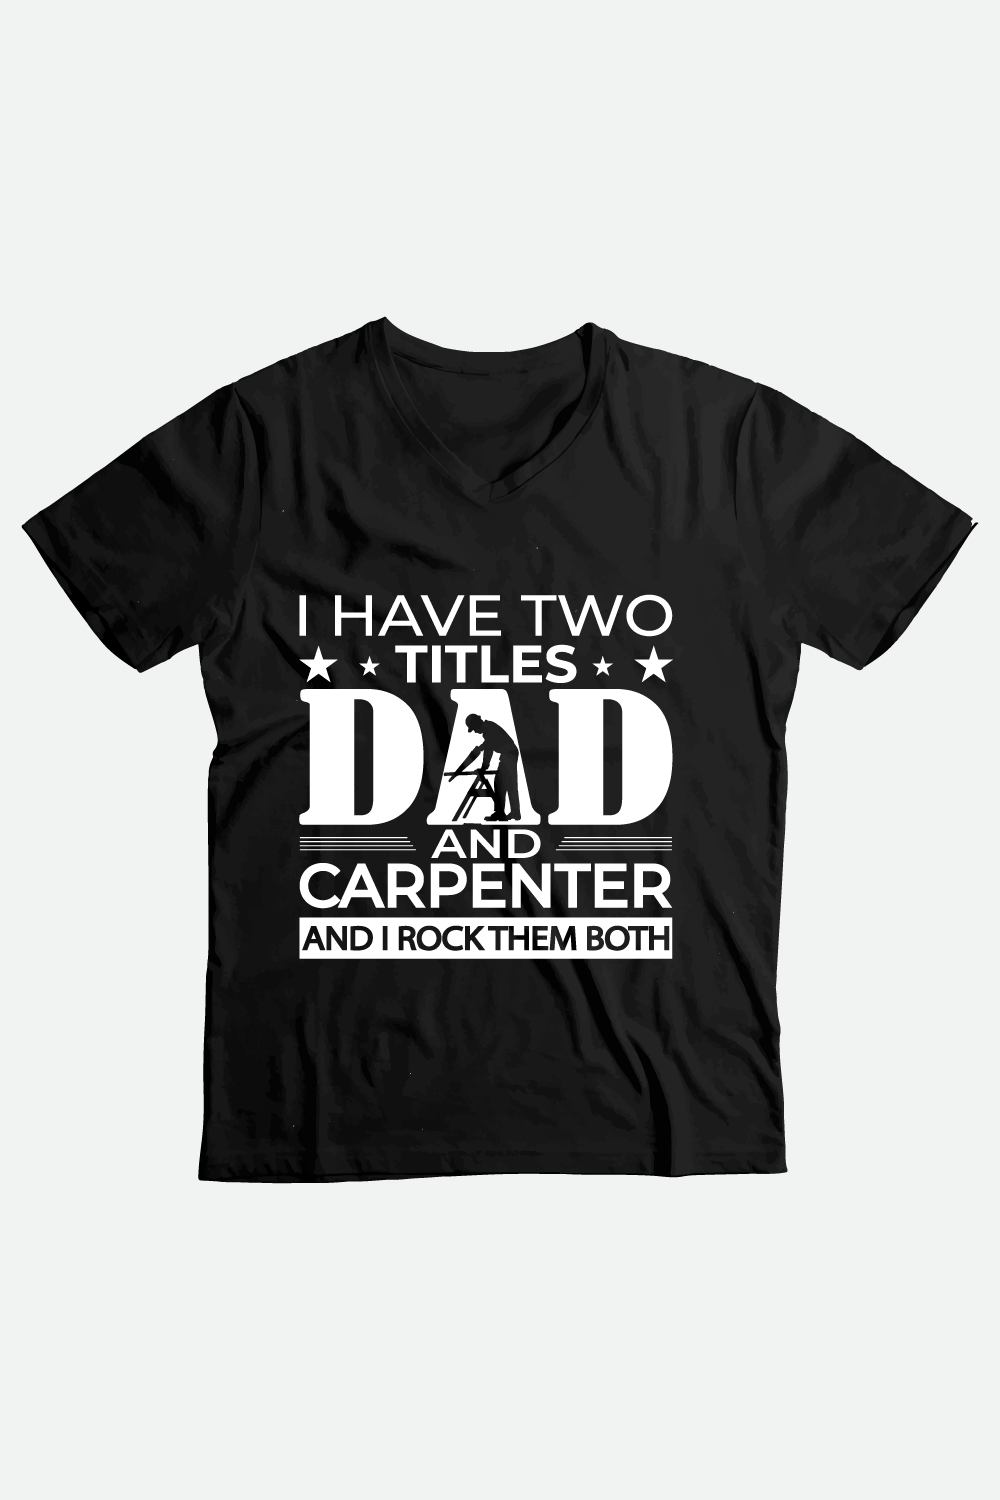 Carpenter dad t-shirt design pinterest preview image.